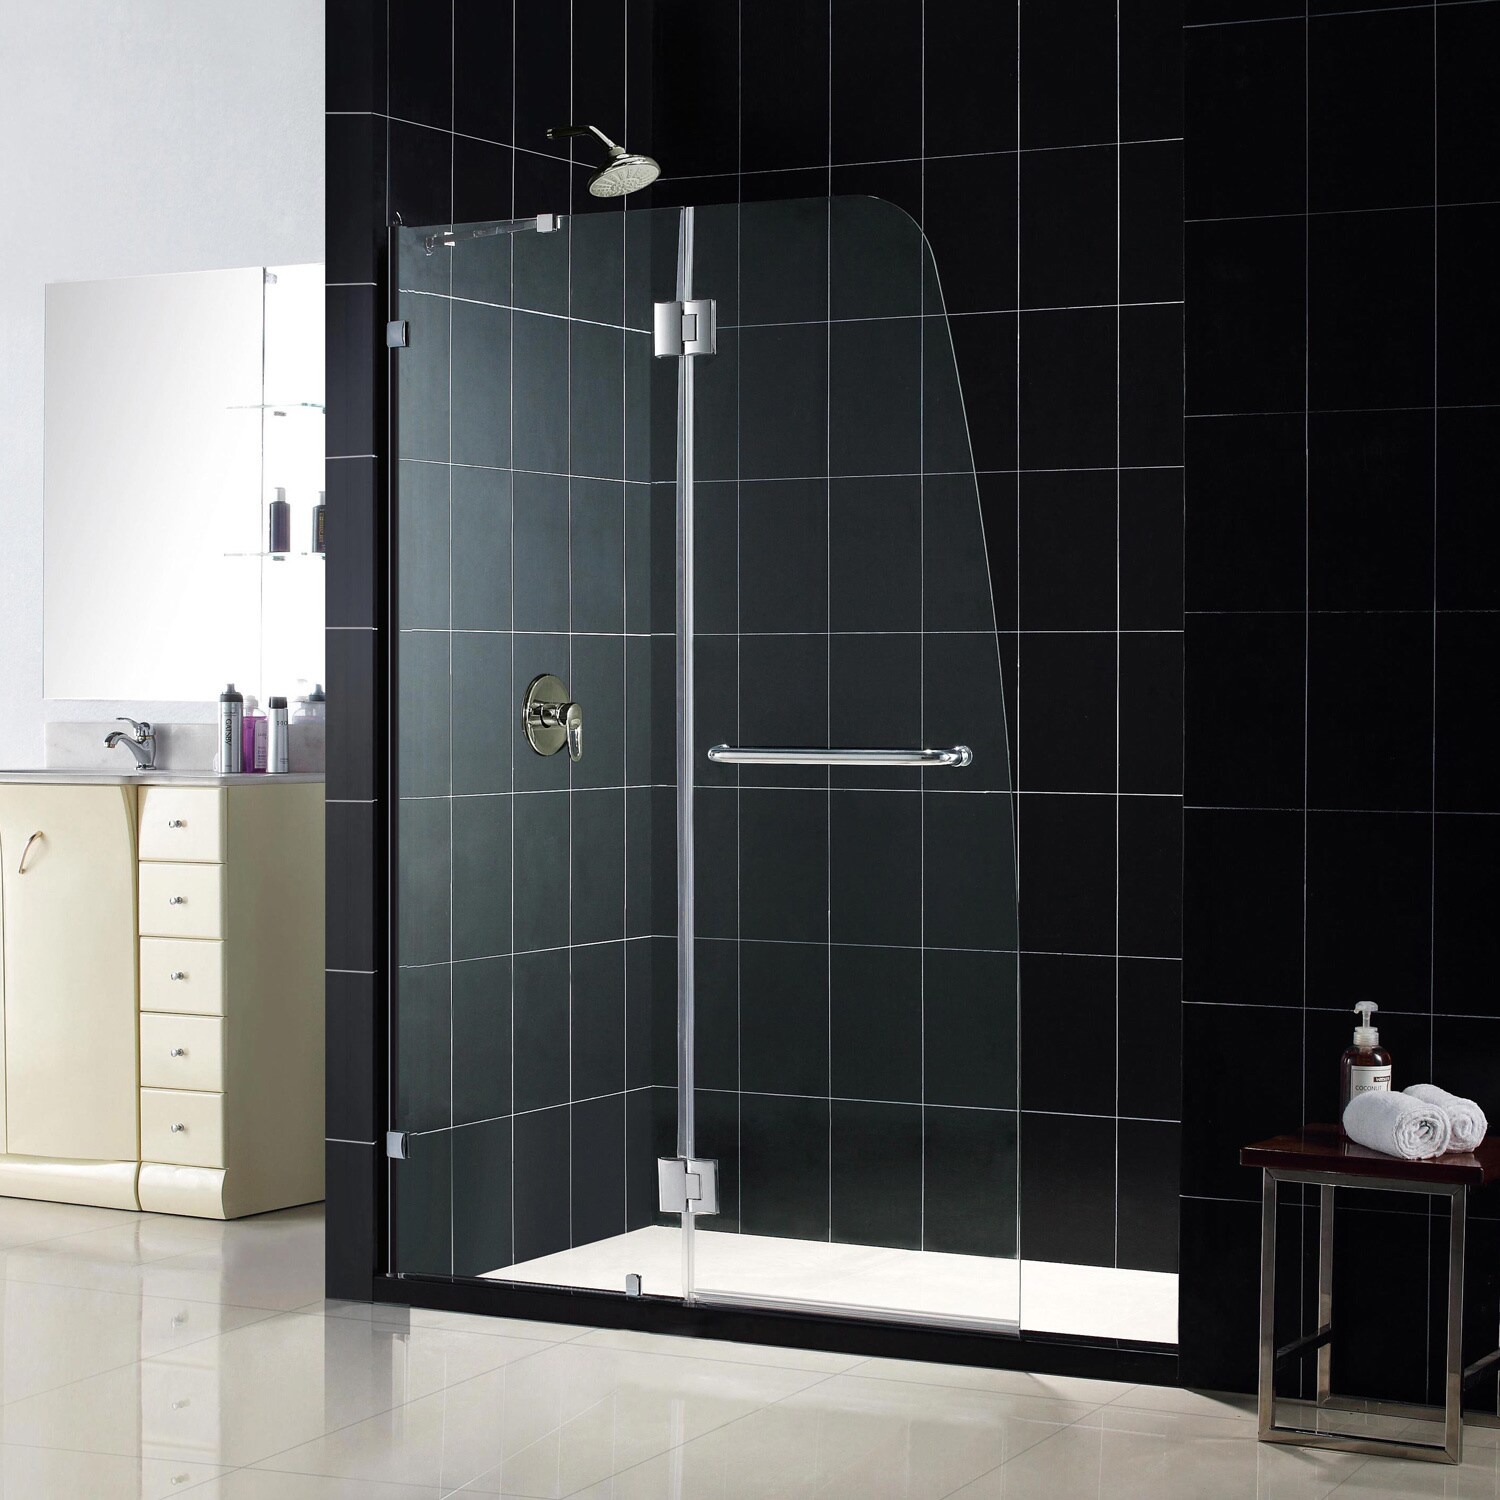 DreamLine Aqua 48x72 inch Clear Glass and Brushed Nickel Shower Door